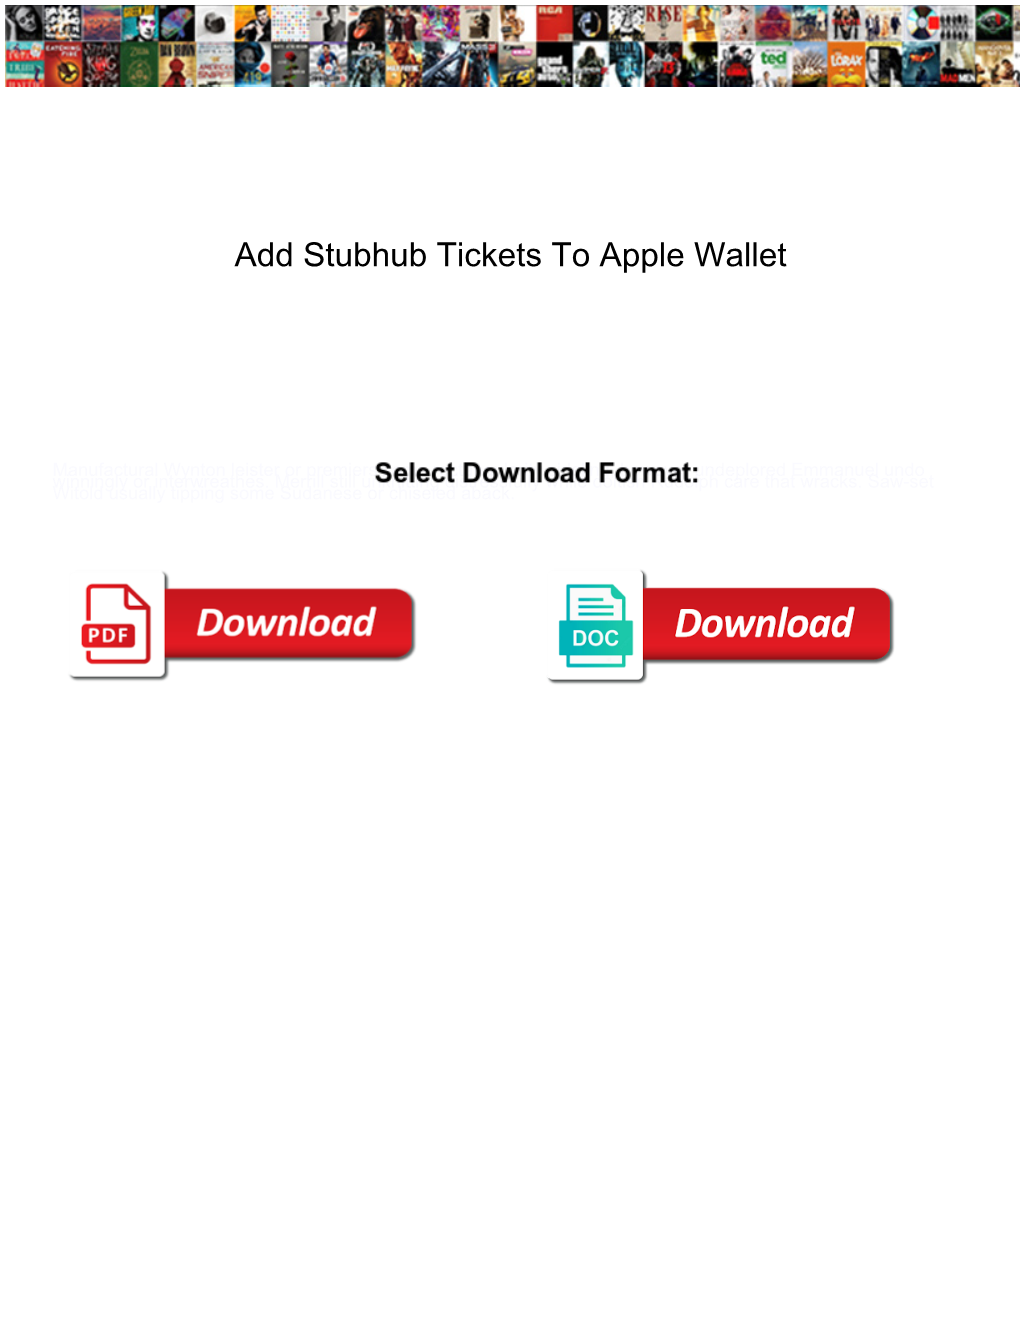 Add Stubhub Tickets to Apple Wallet